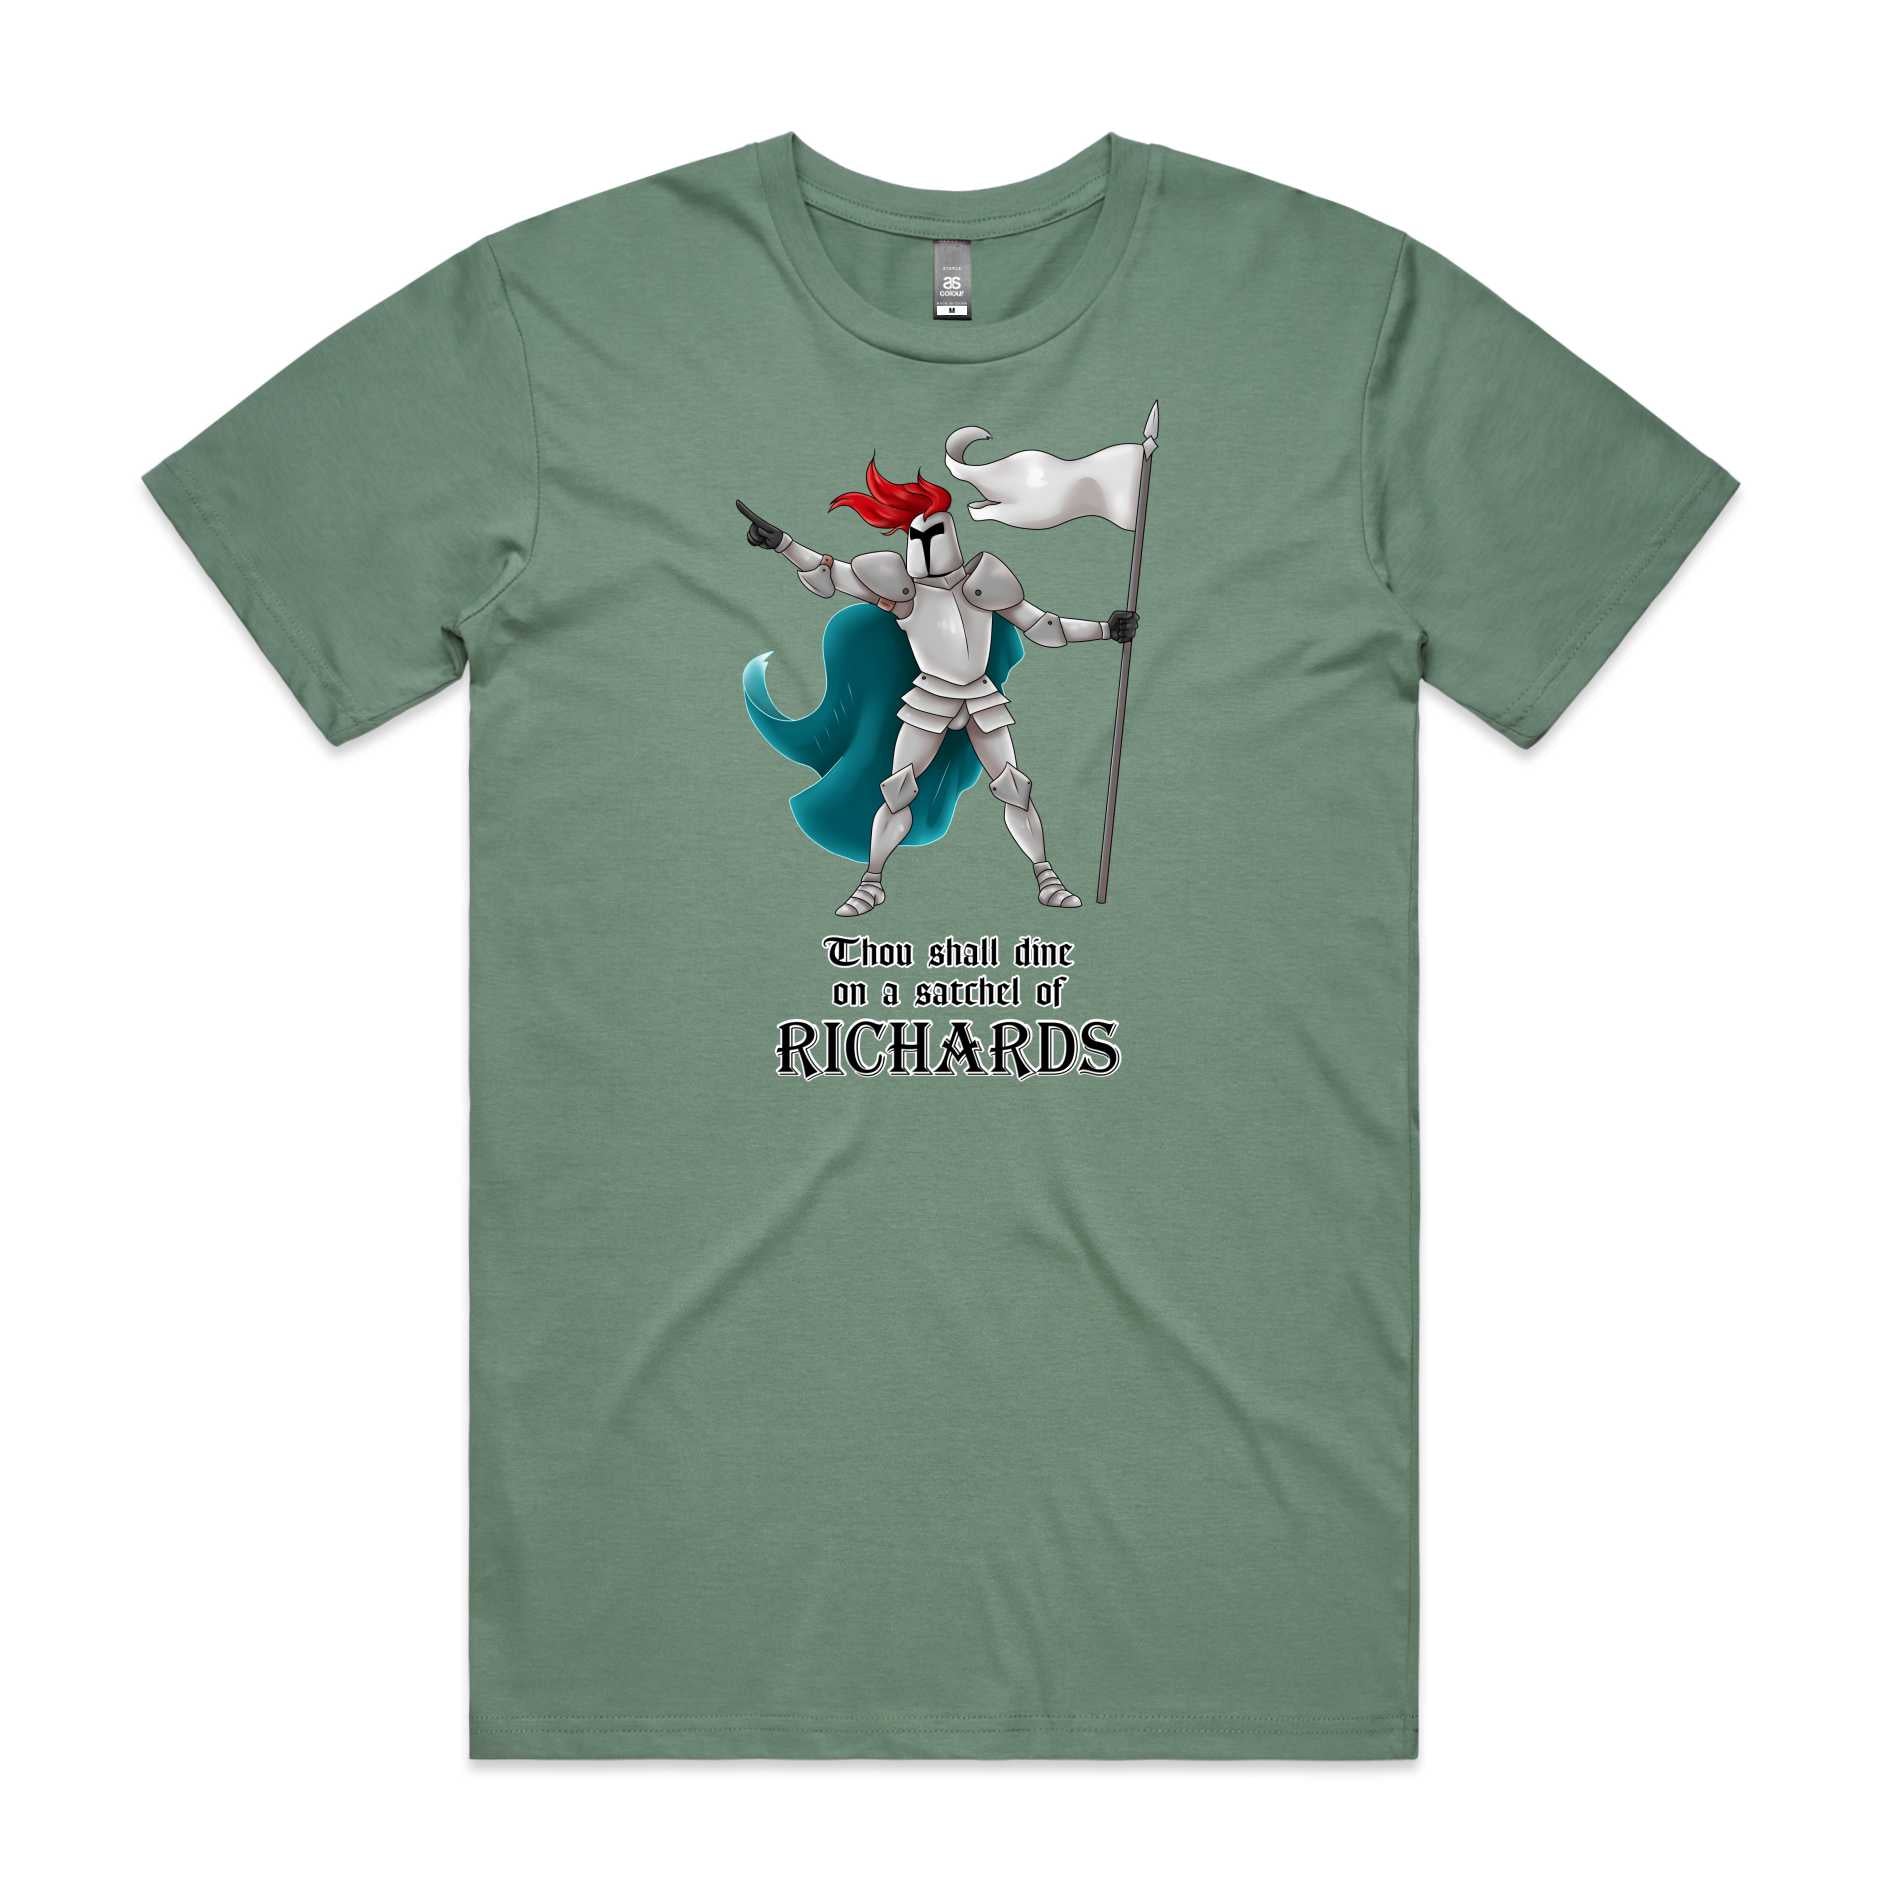 Satchel of Richards T-Shirt